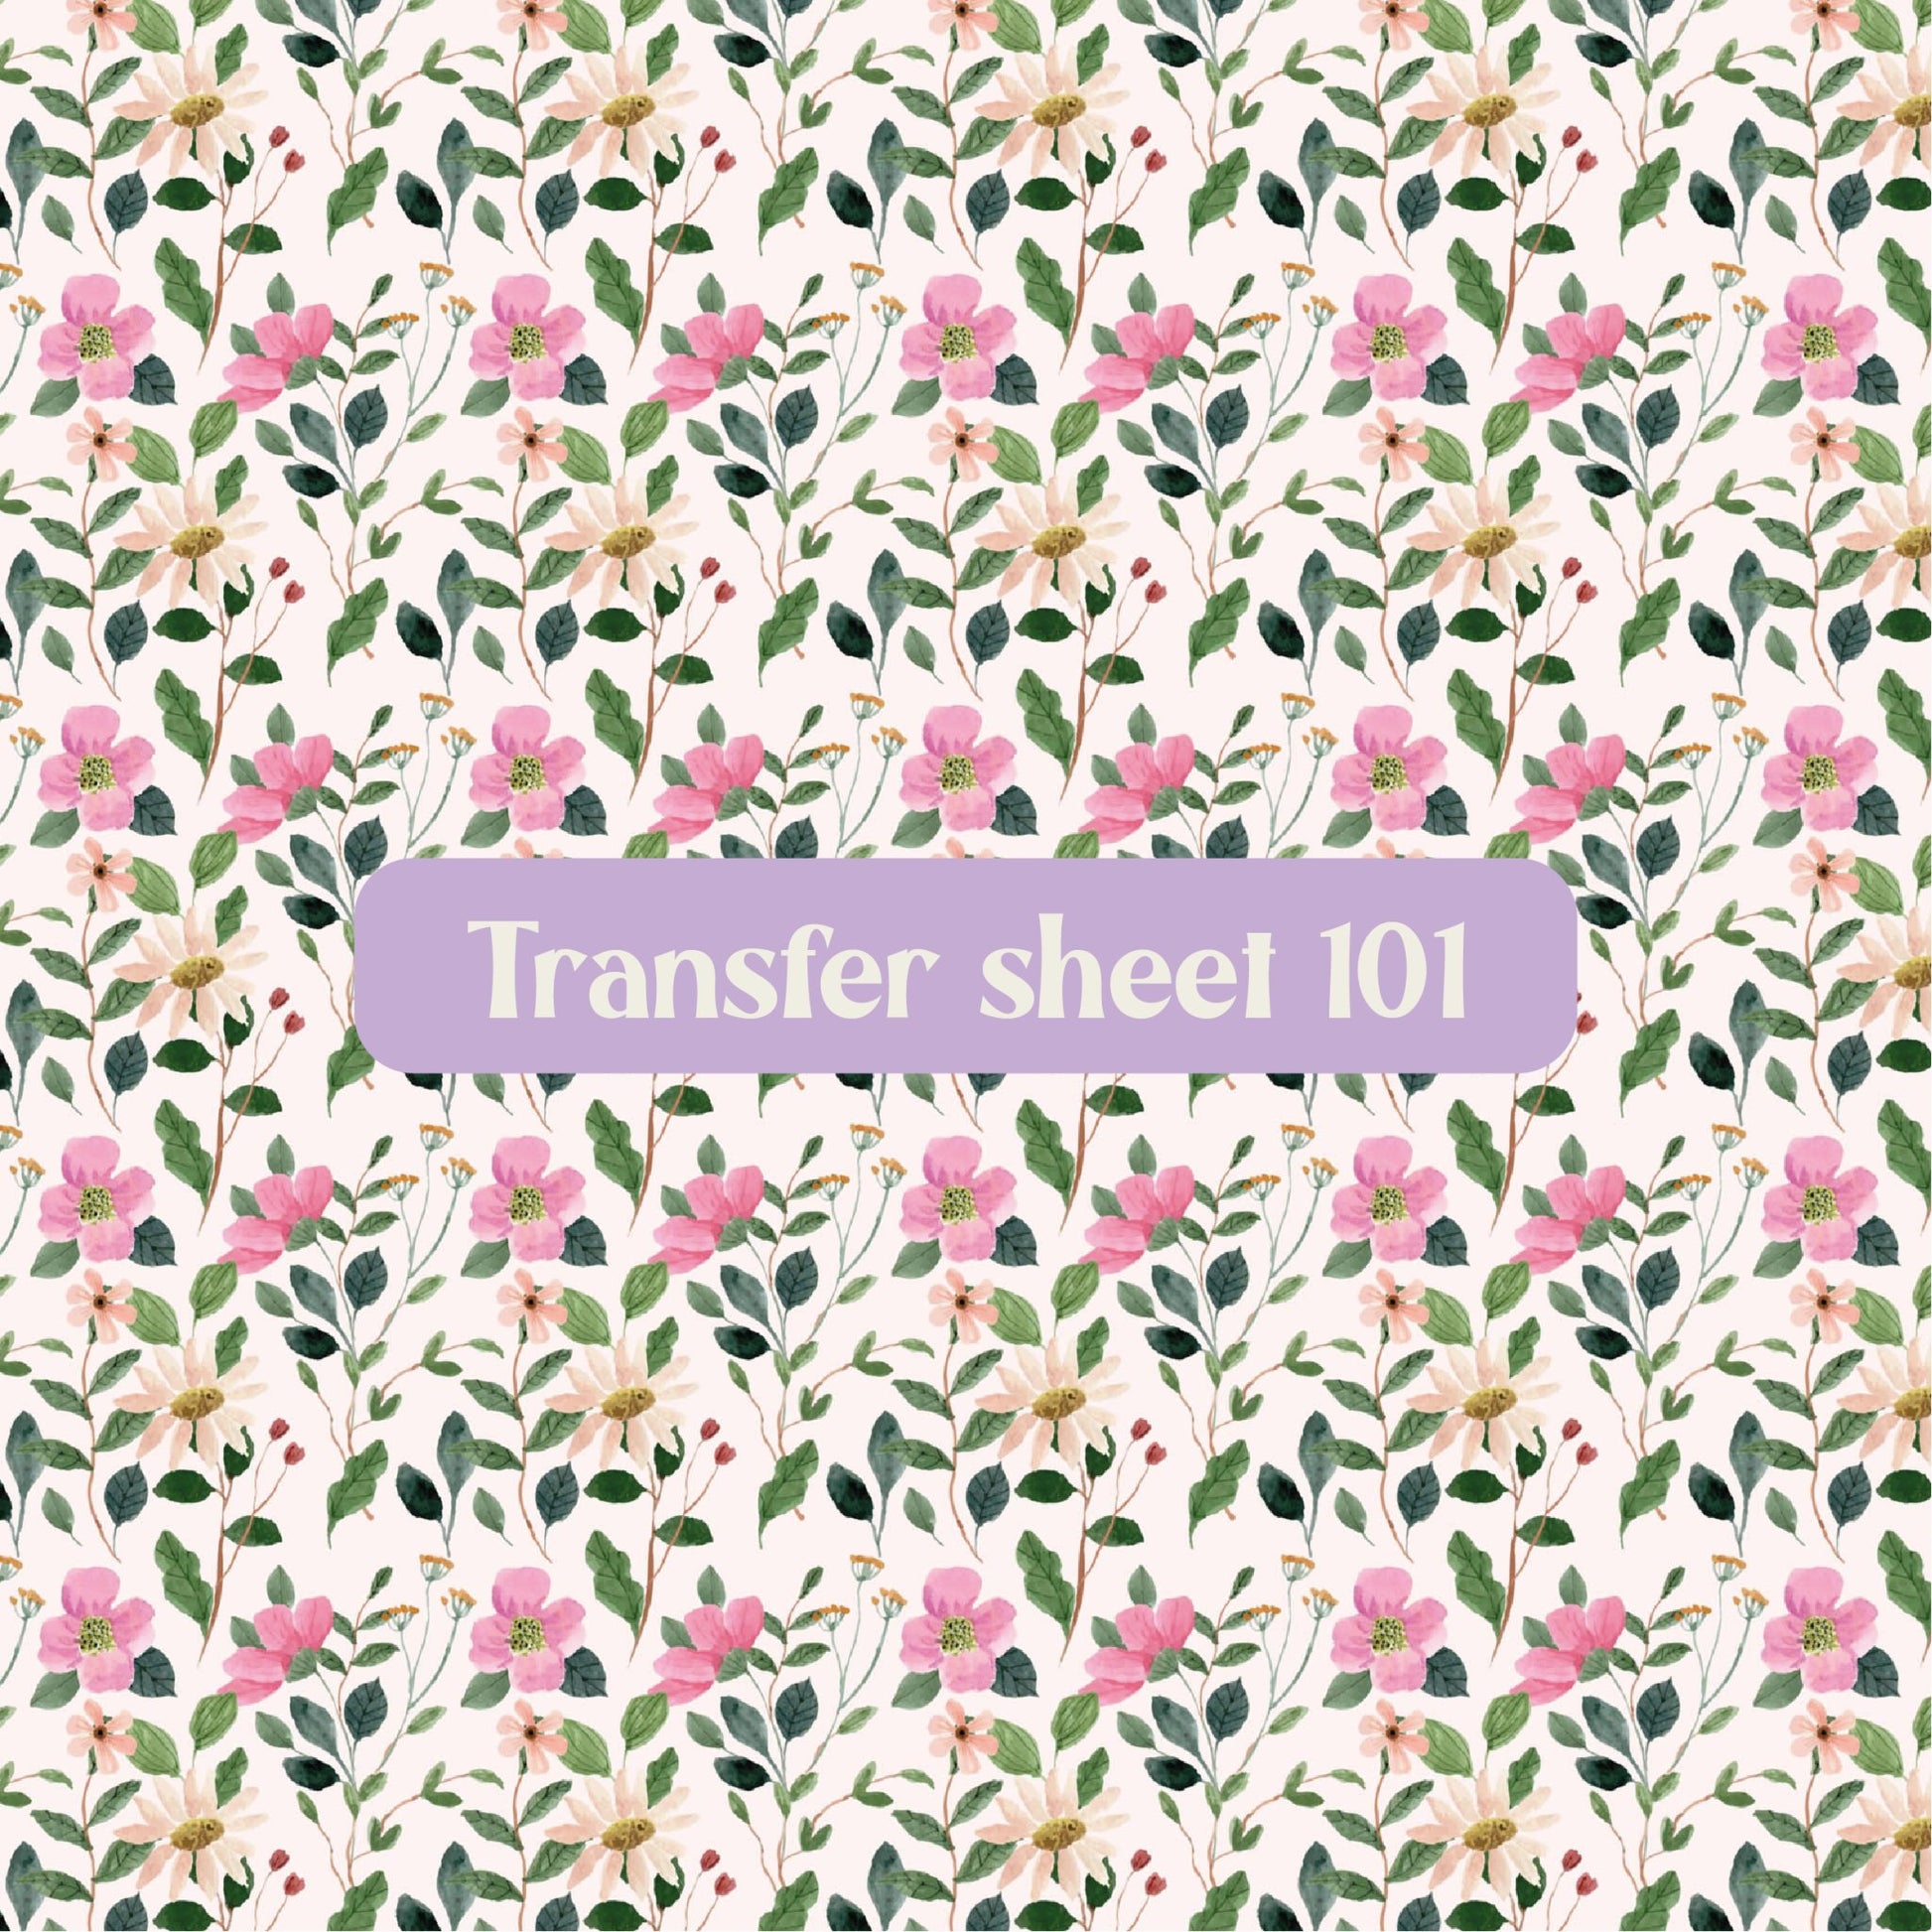 Transfer sheet 101 - Transfer paper - CLN Atelier